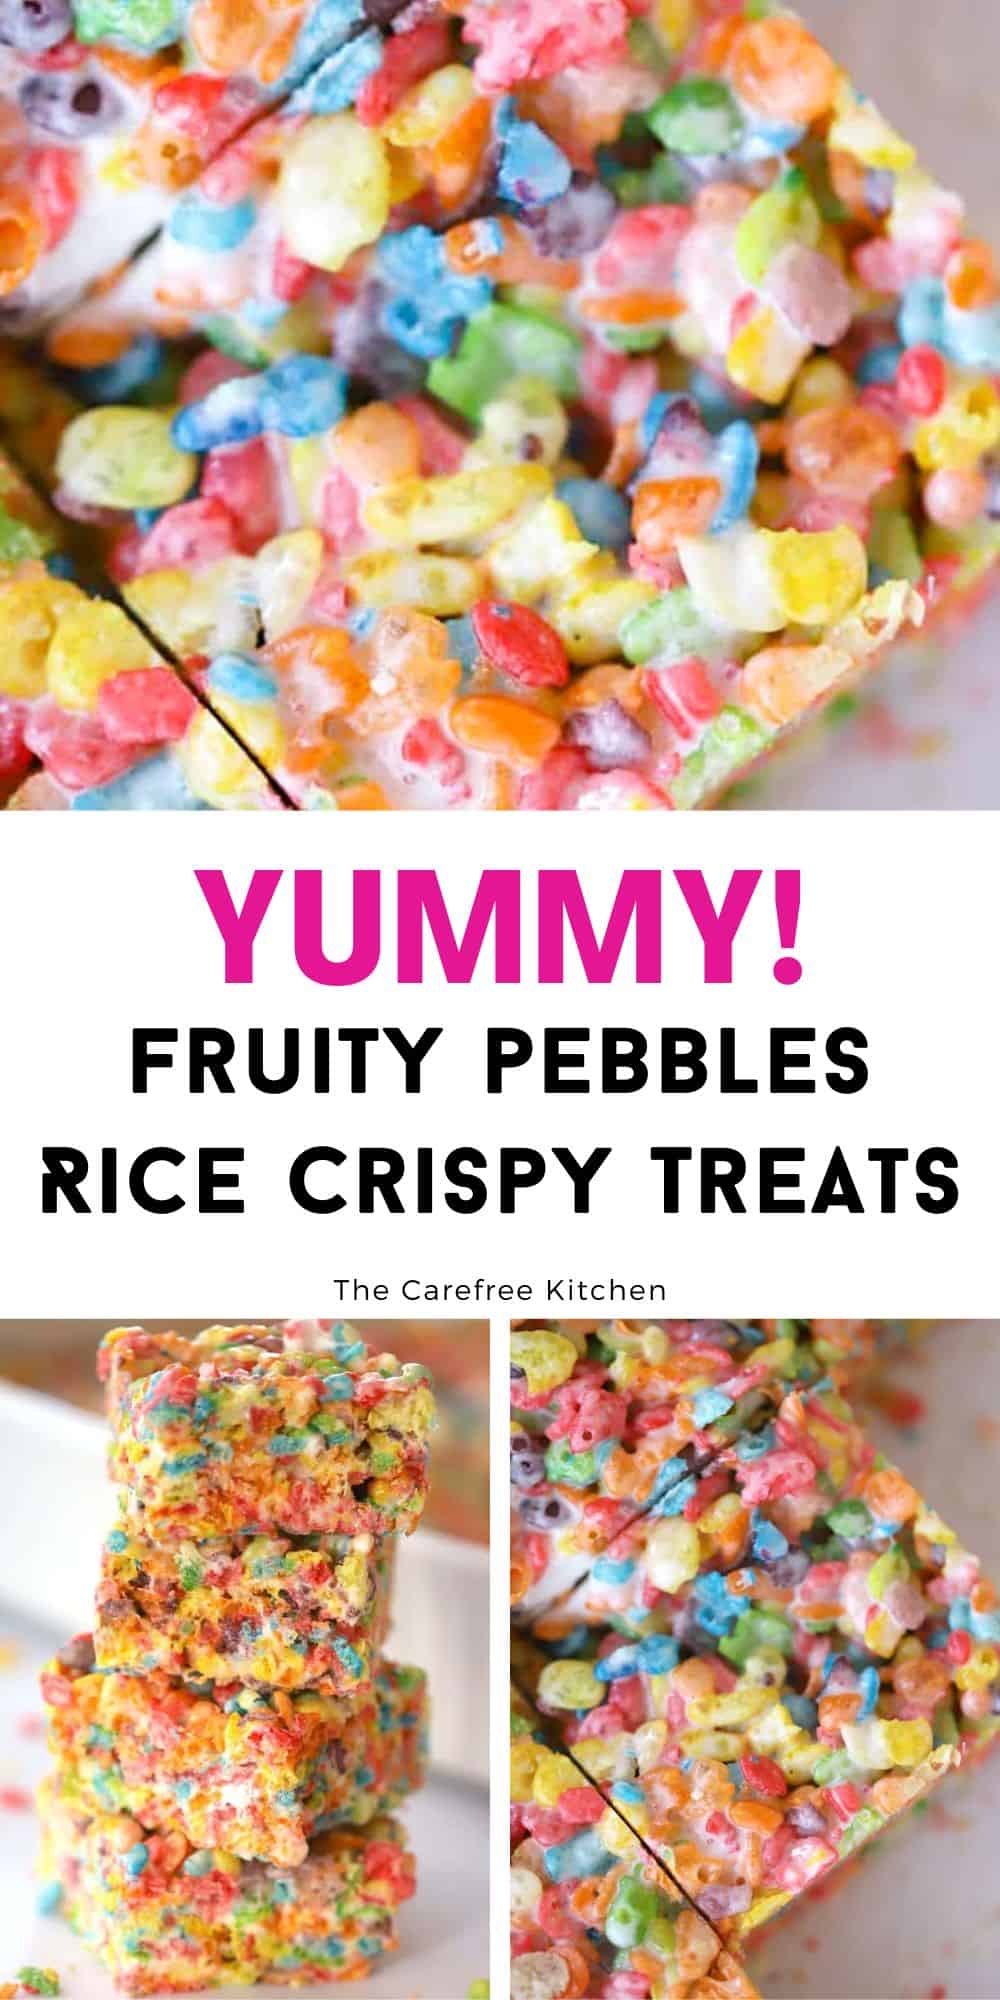 Fruity Pebble Rice Crispy Treats - The Carefree Kitchen